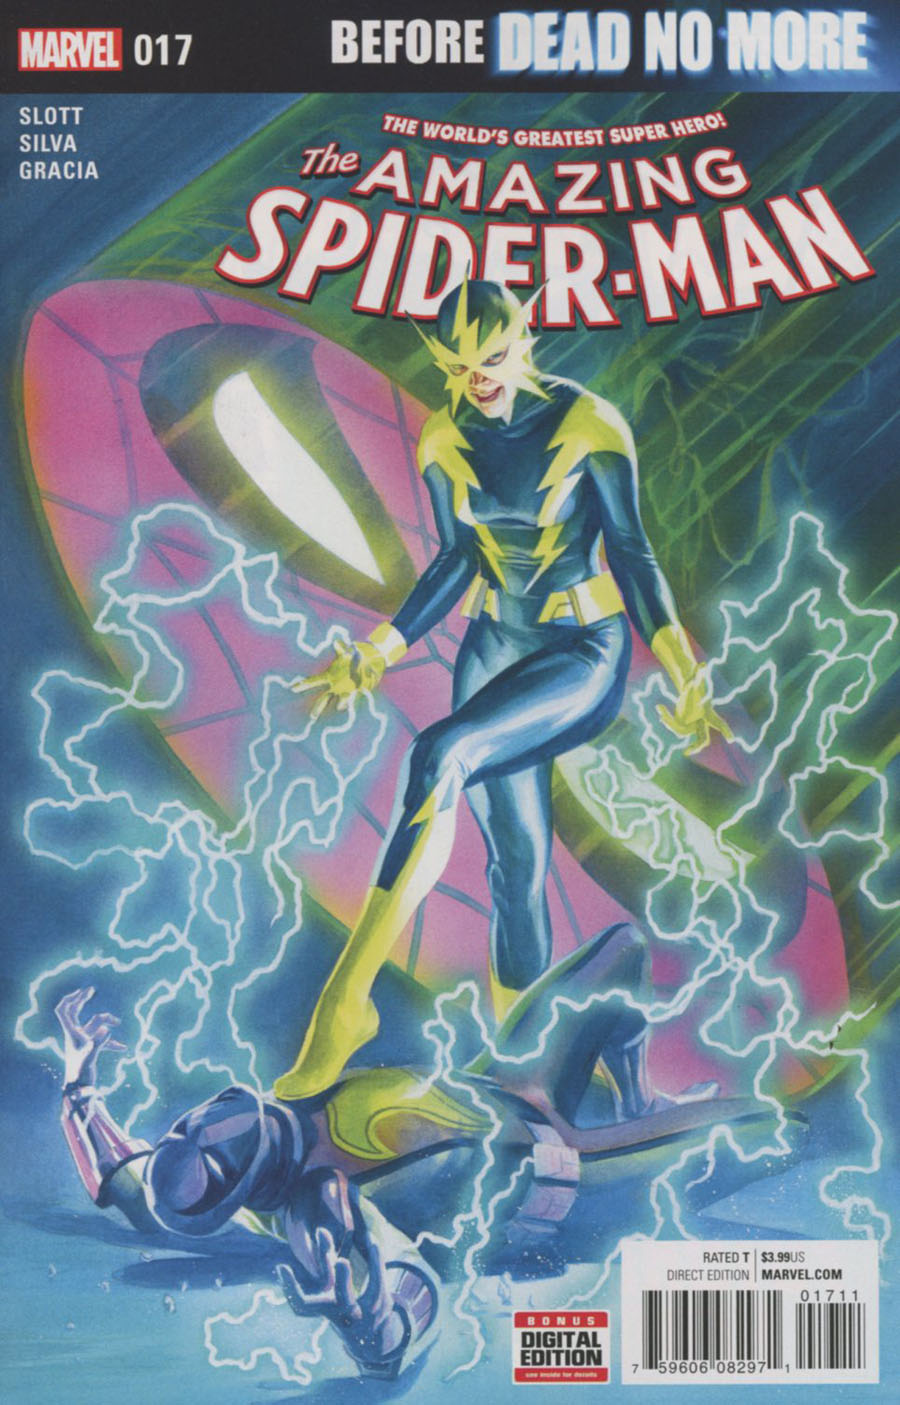 Amazing Spider-Man Vol 4 #17 Cover A Regular Alex Ross Cover (Dead No More Prelude)